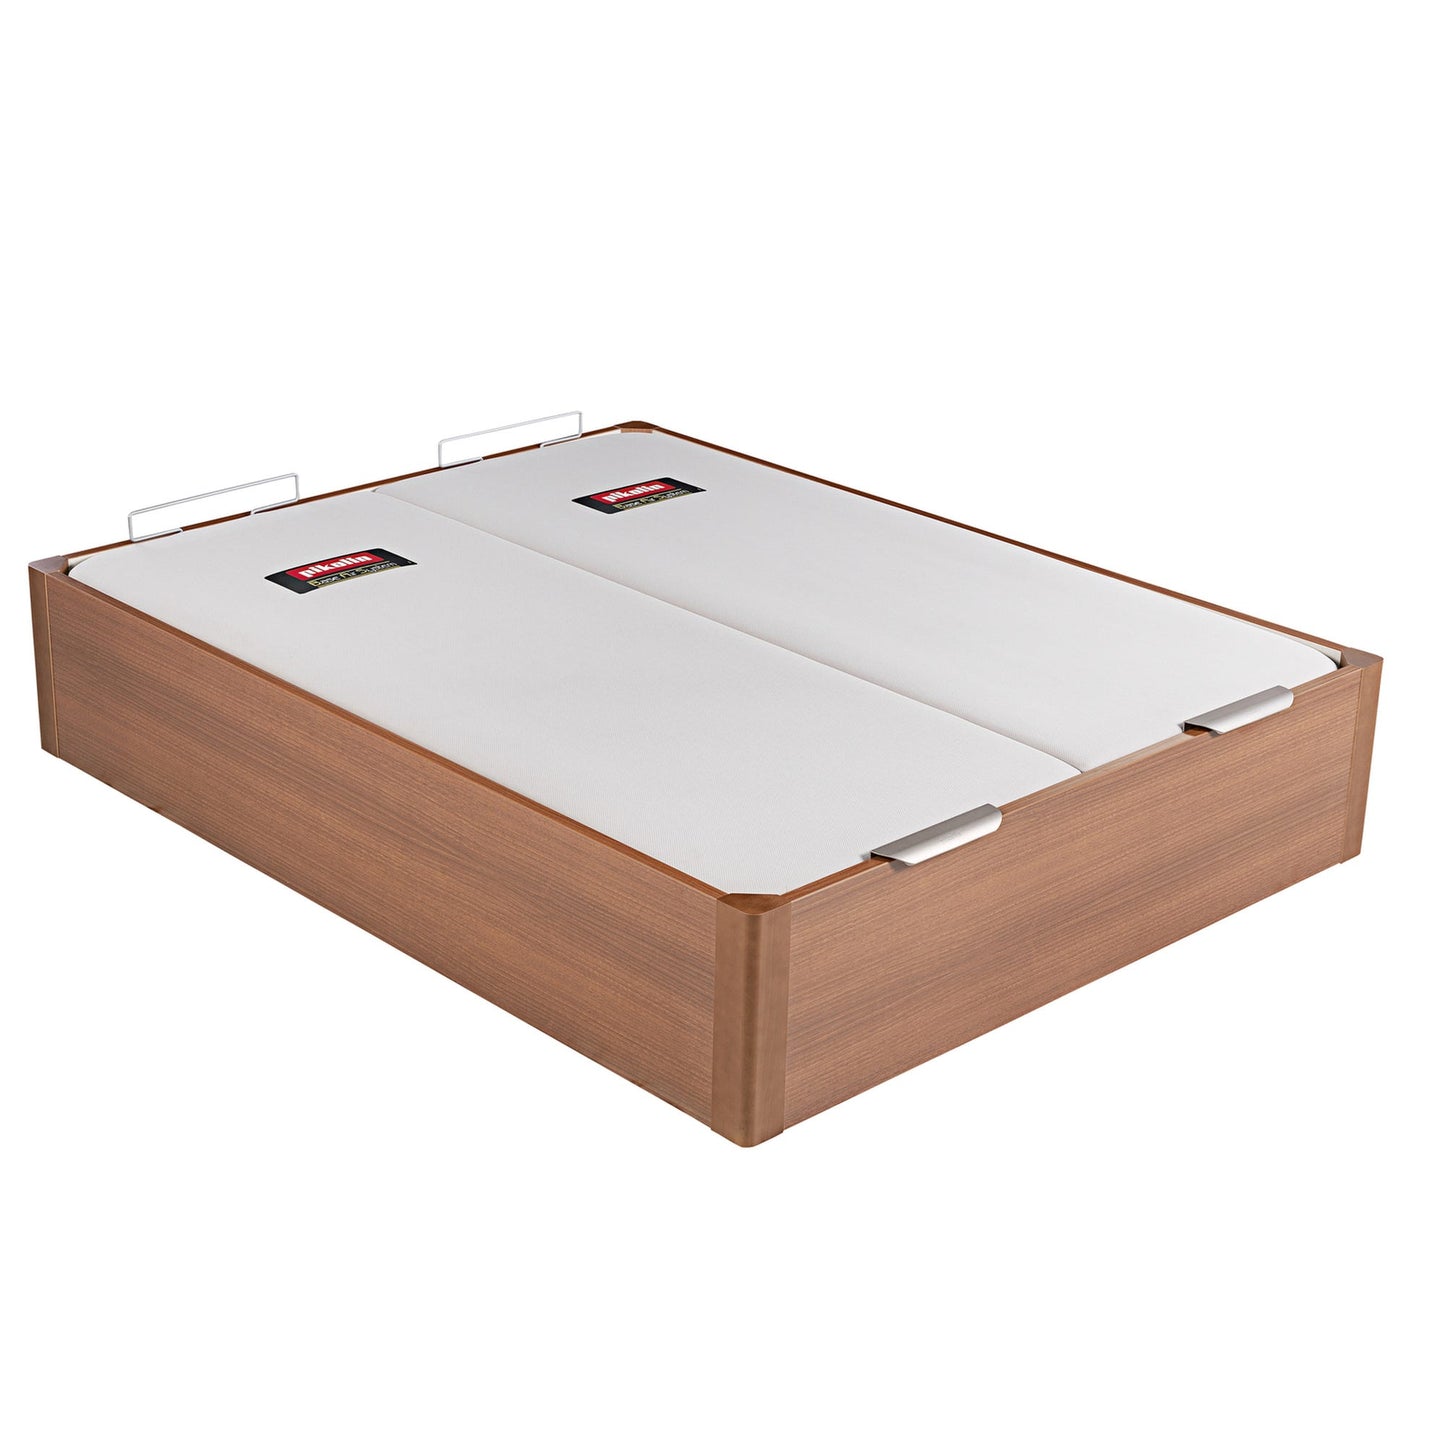 Canapé abatible de madera de alta capacidad tapa doble de color cerezo - DESIGN - 160x210